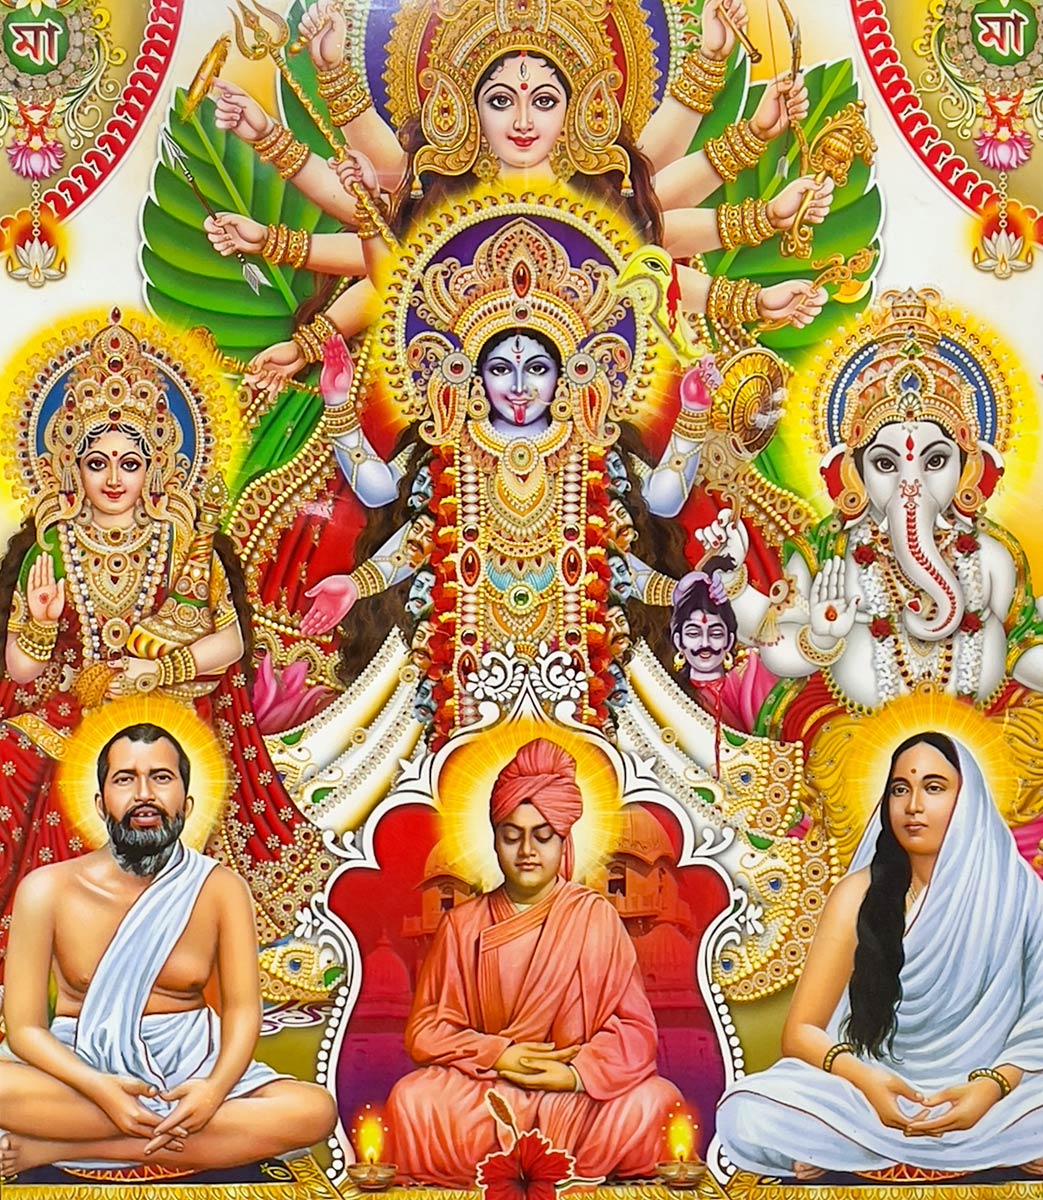 Poster raffigurante la dea Tara con Ganesh, Sri Ramakrishna, Vivekananda e Sarada Devi, Tempio di Ma Tara, Tarapeeth